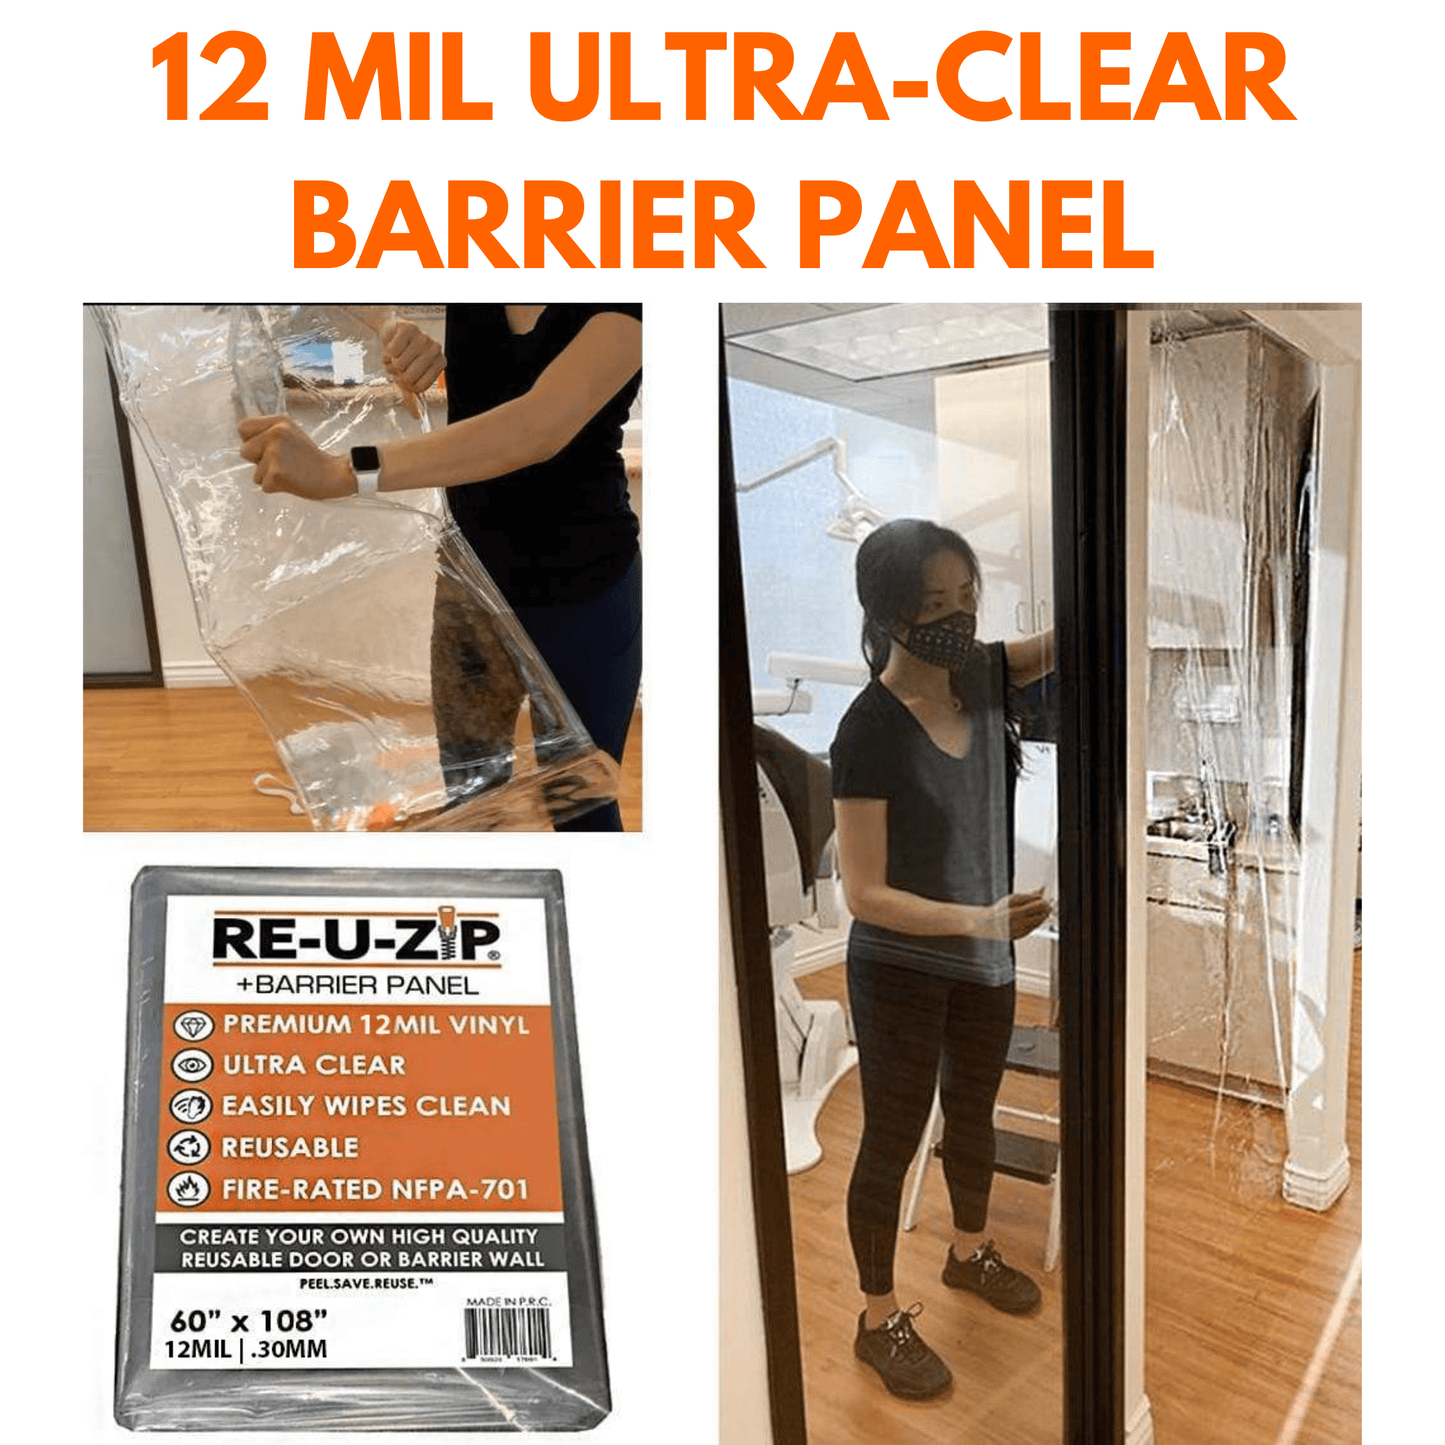 RE-U-ZIP INNOVATIVE DUST BARRIER SOLUTIONS Construction RE-U-ZIP™ Reusable Dust Barrier Panel